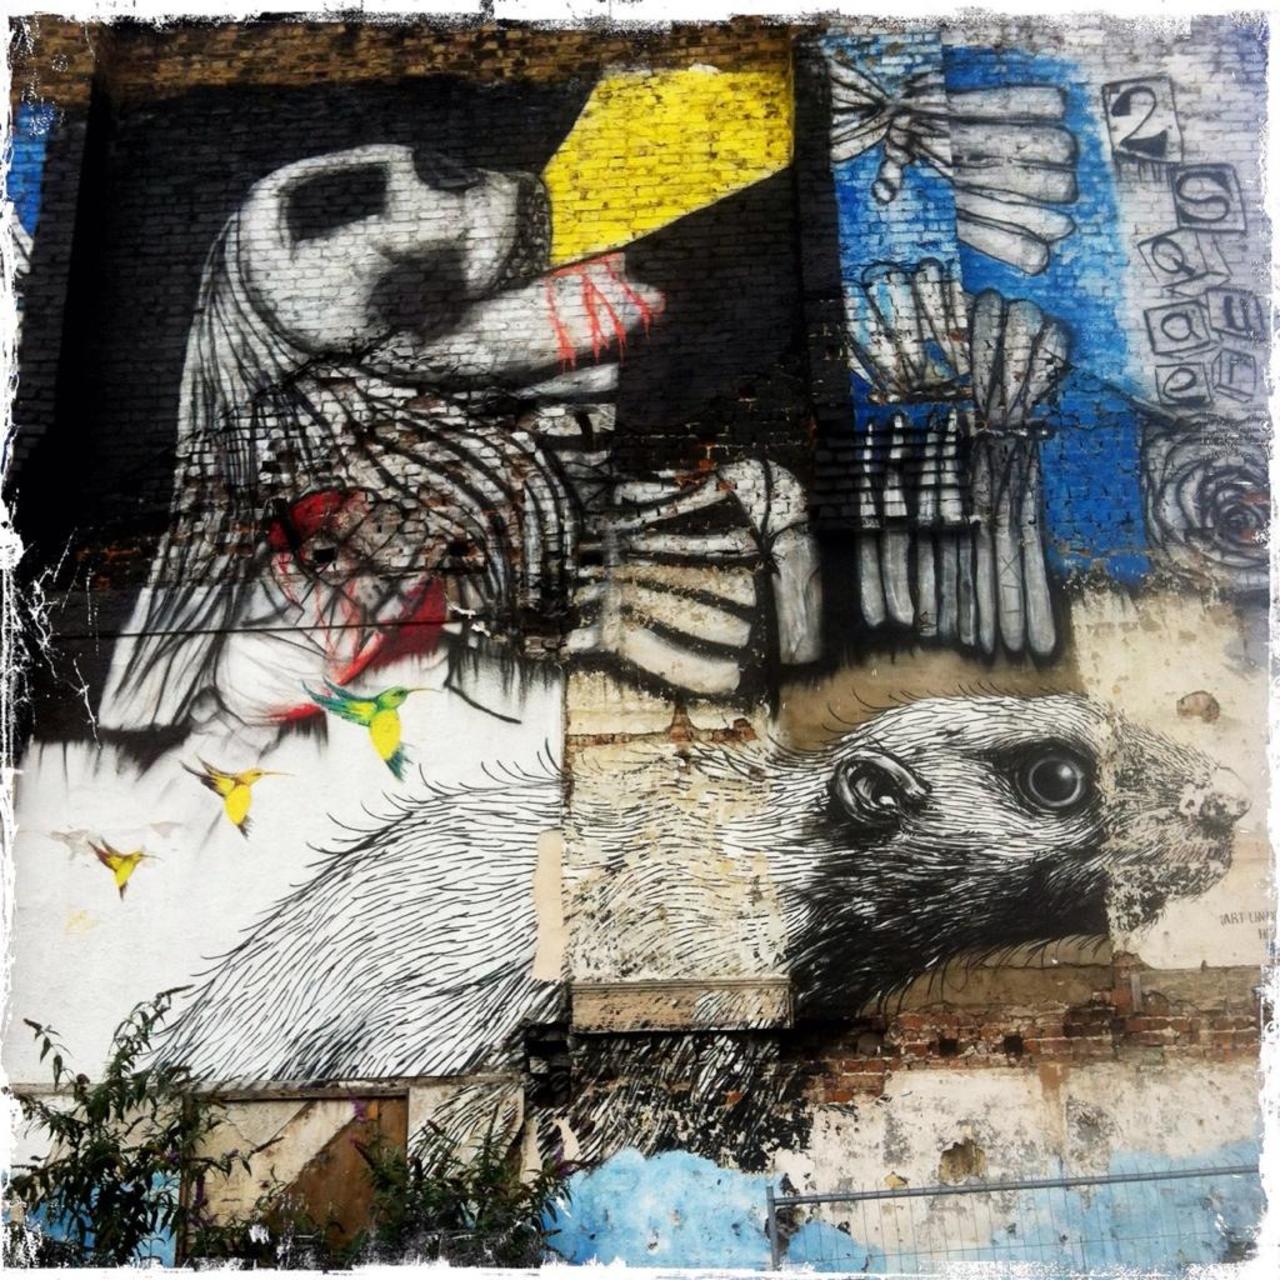 Roa & @joycetreasure & others on Hackney Road #art #streetart @ShoreditchGraf #graffiti http://t.co/ukPtXairlD